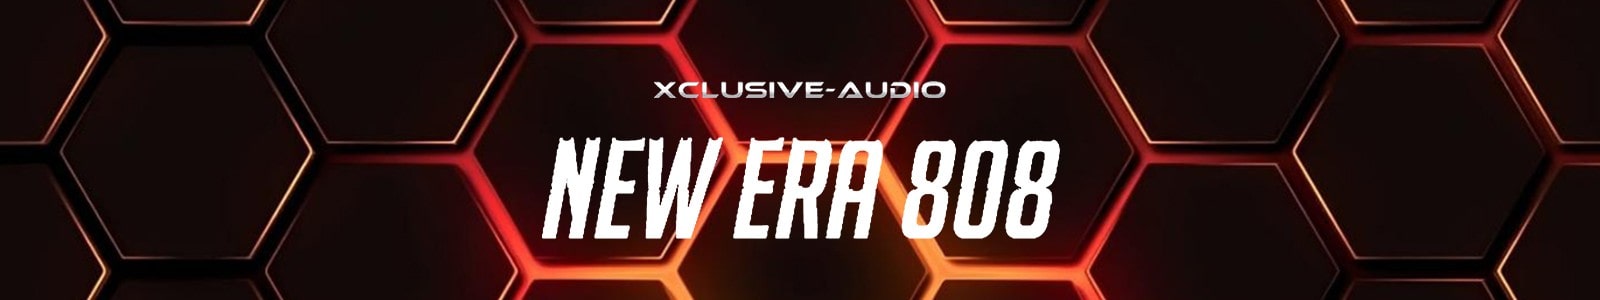 new era 808